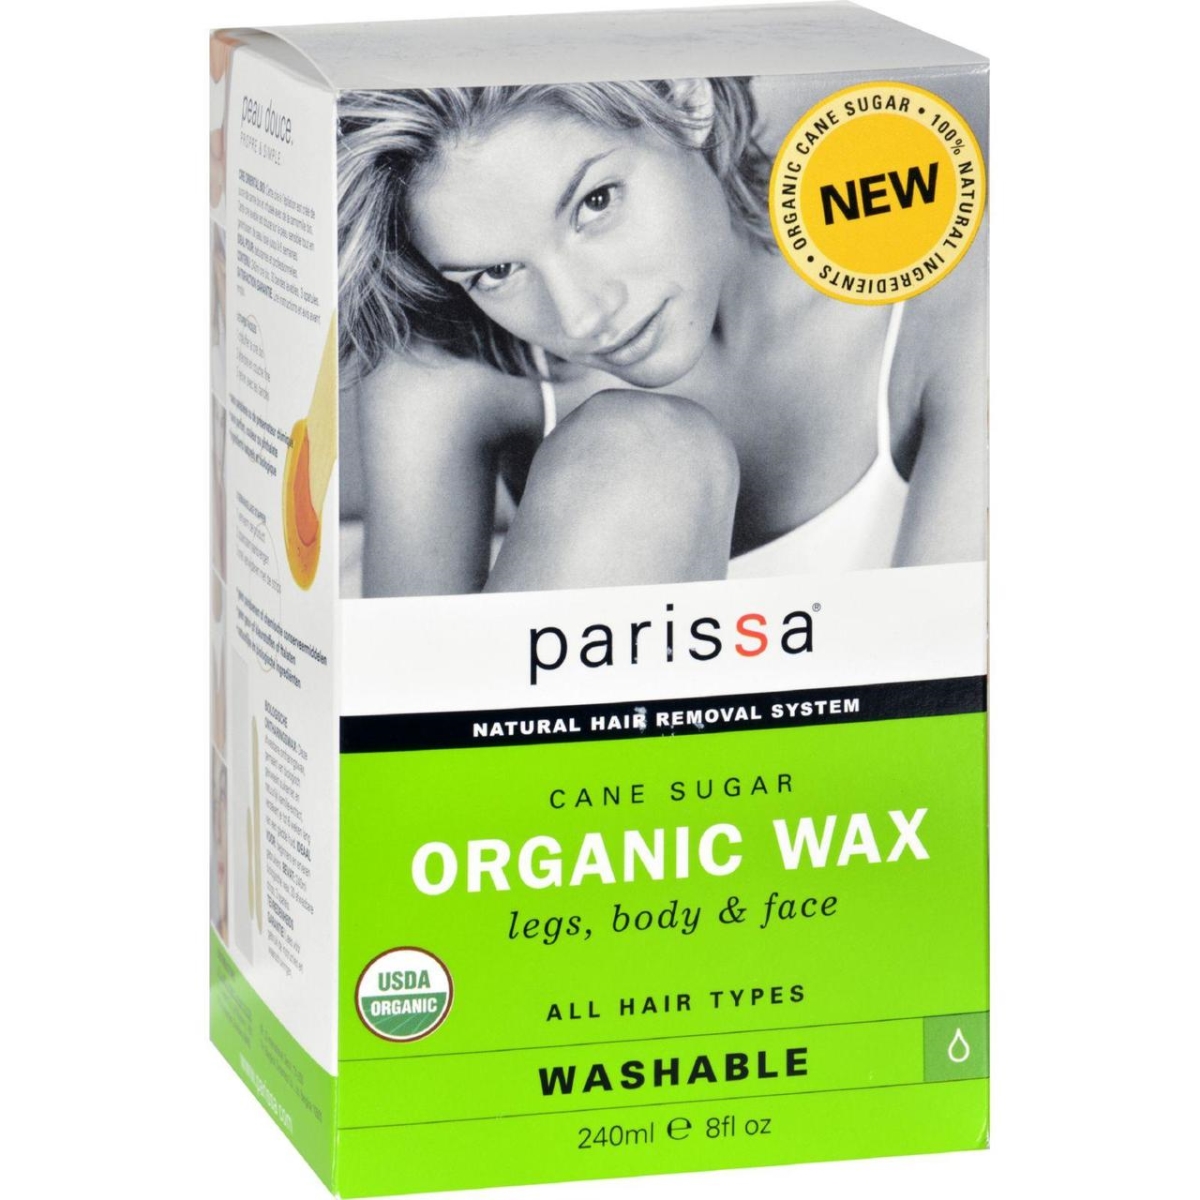 Hg1638949 8 Oz Cane Sugar Hair Removal Wax - Organic